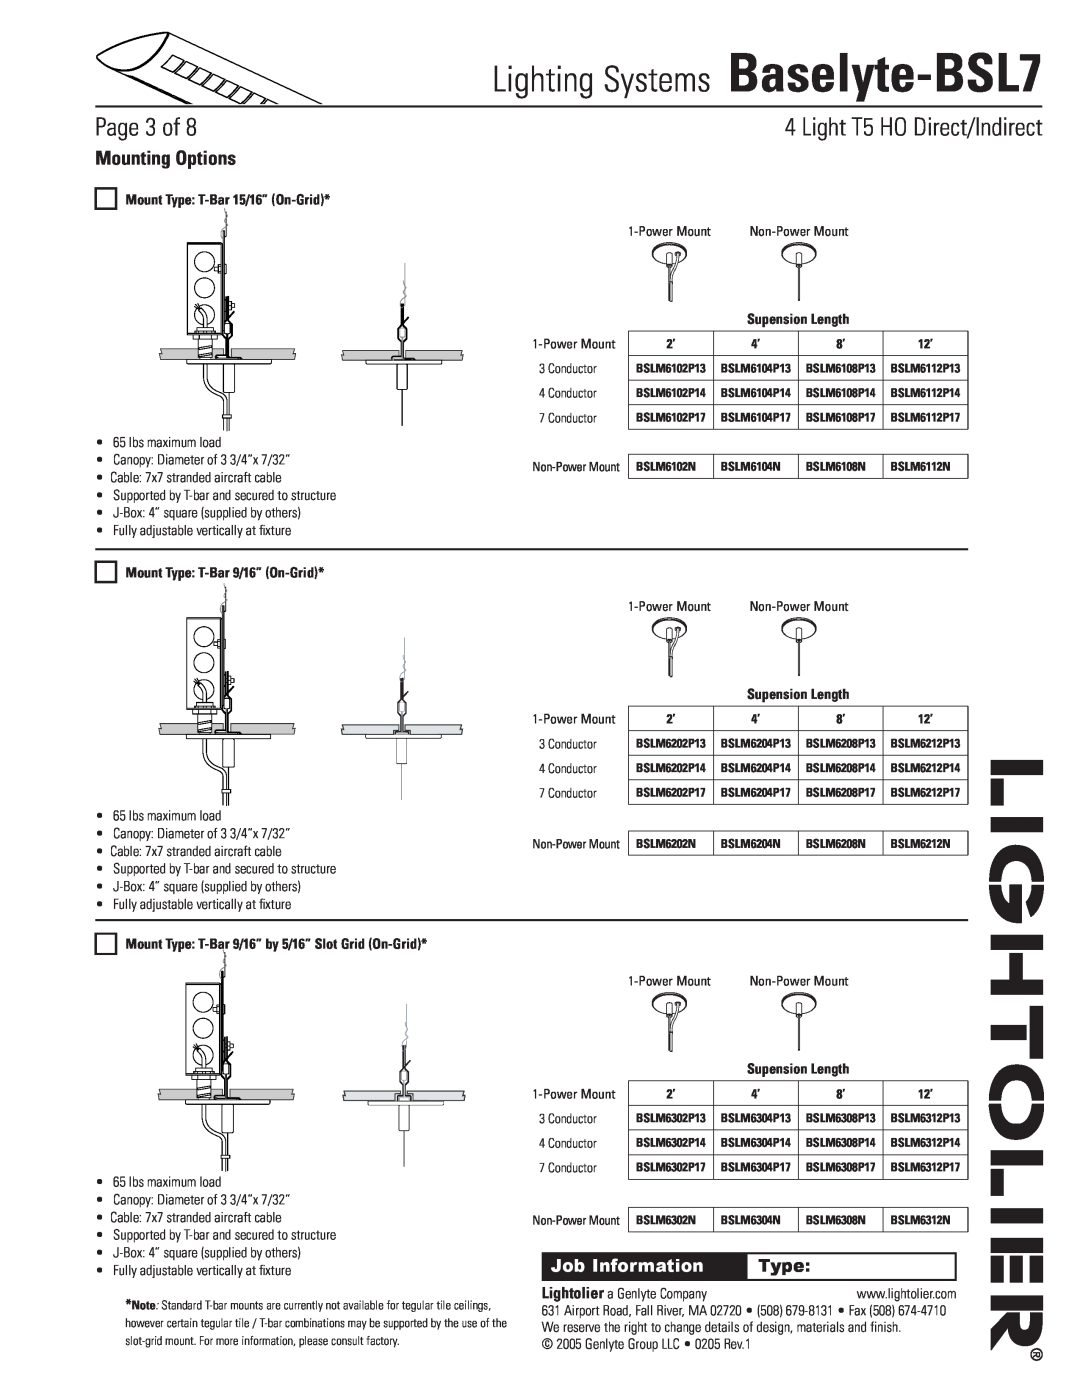 Lightolier Baselyte-BSL7 Mounting Options, Mount Type T-Bar15/16” On-Grid, Supension Length, Mount Type T-Bar9/16” On-Grid 